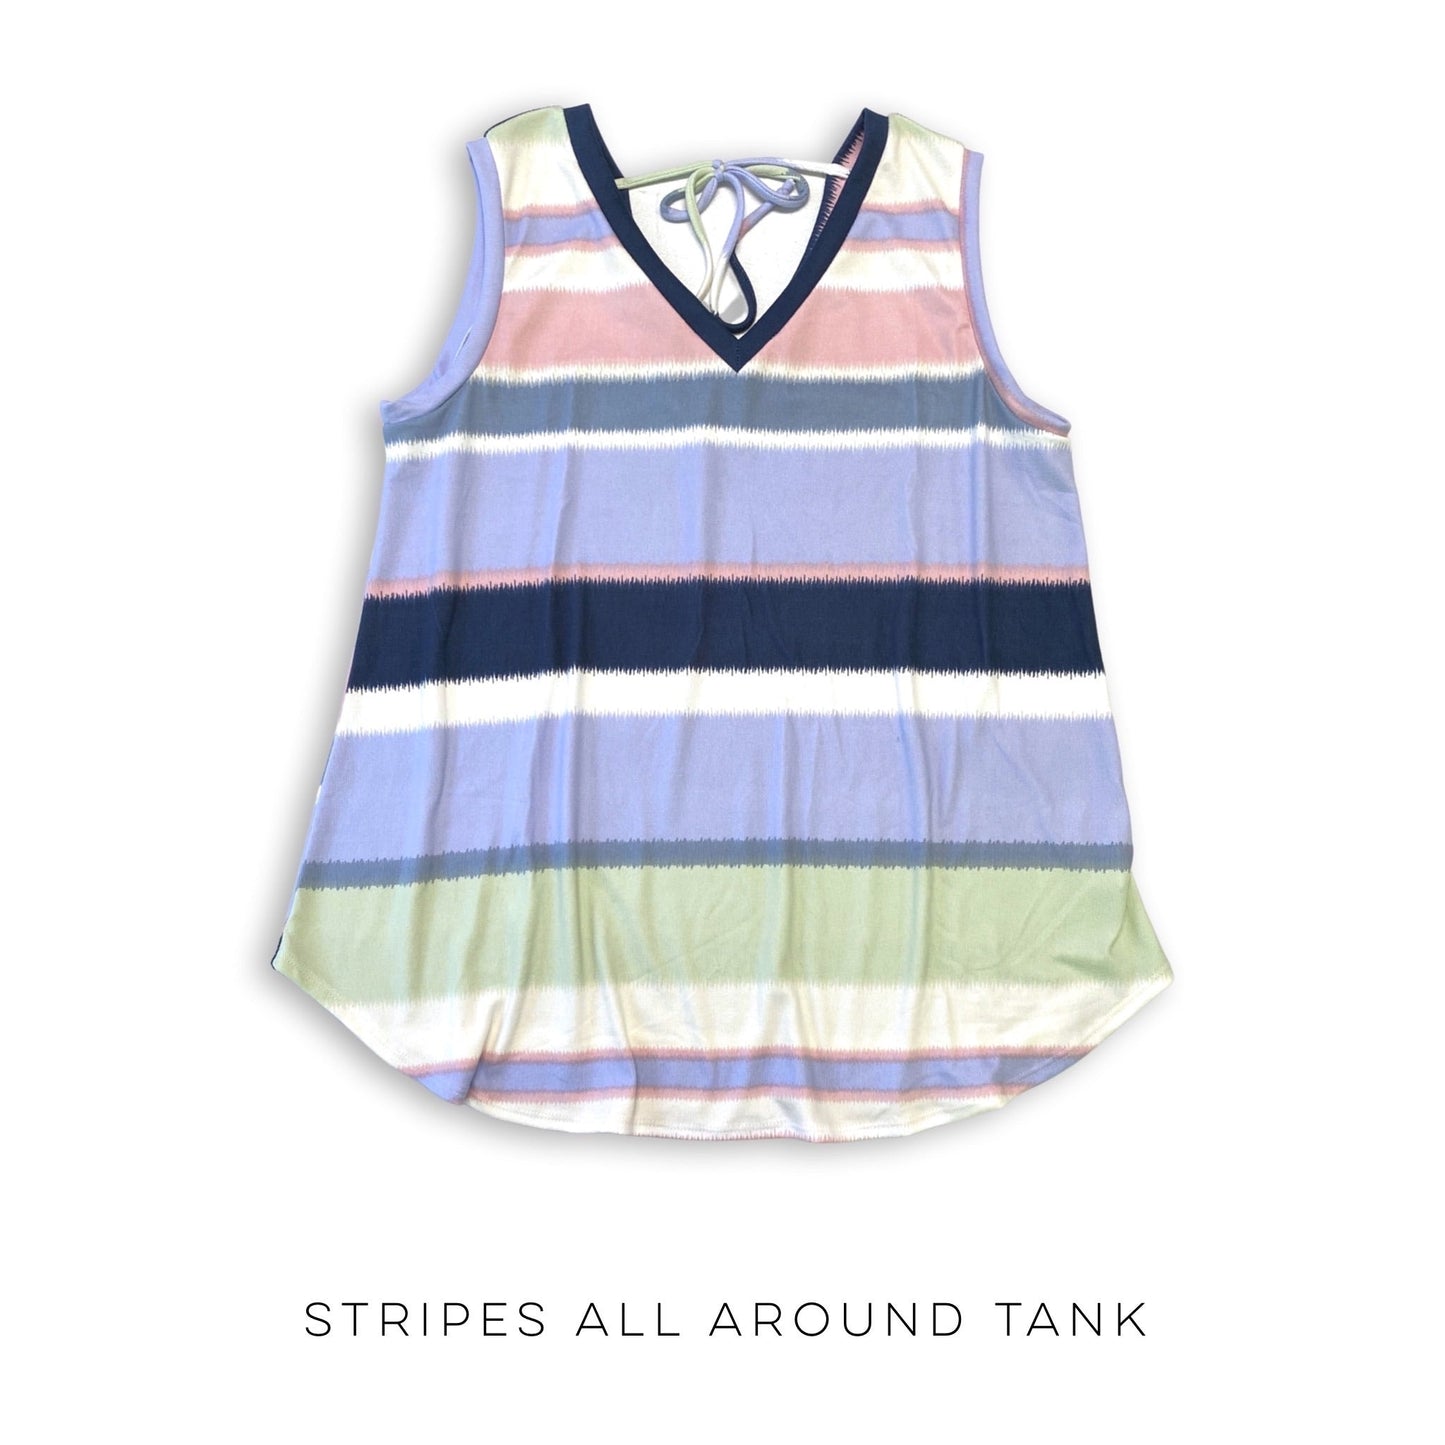 Stripes All Around Tank